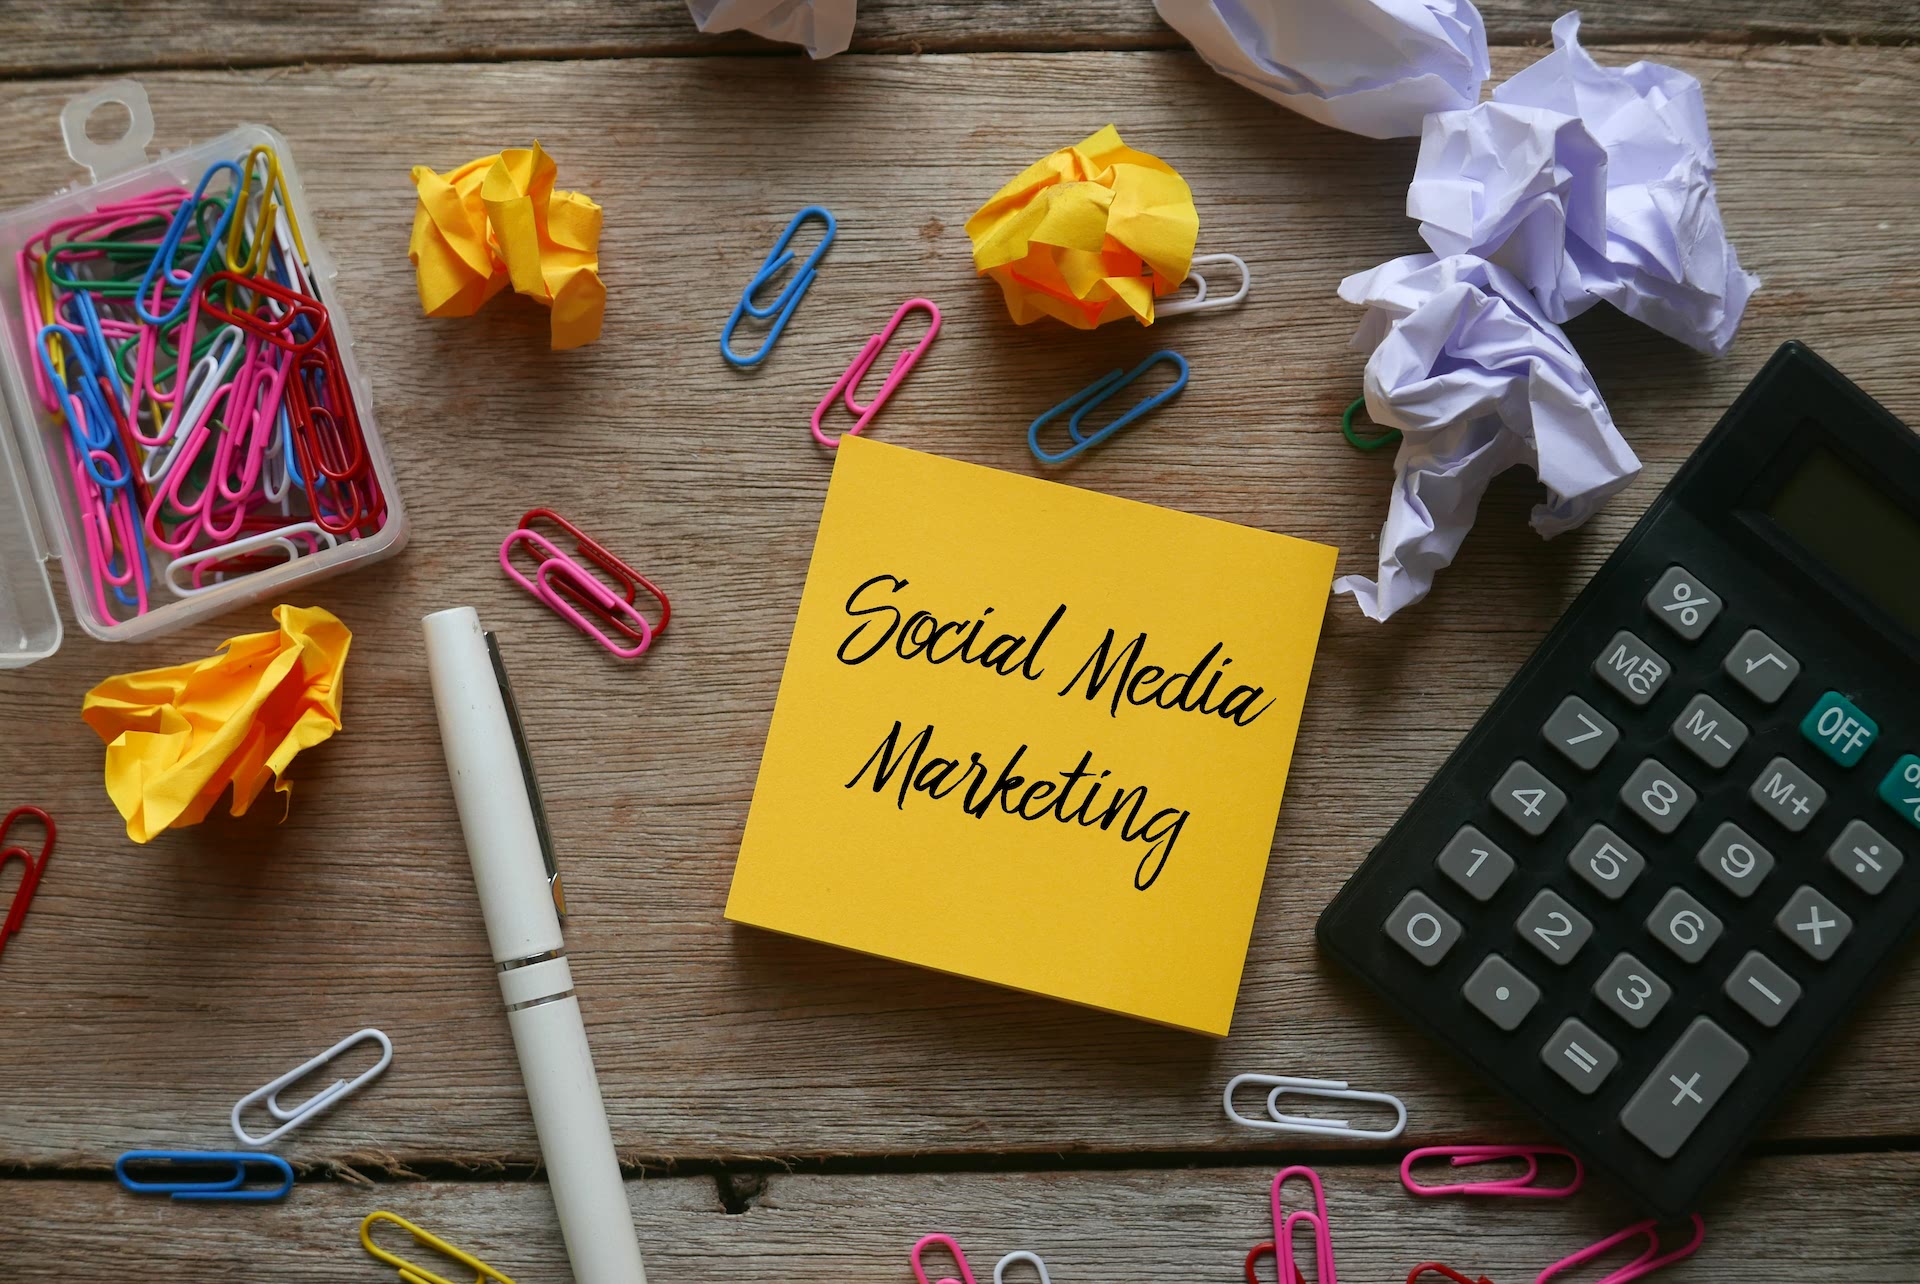 Top Social Media Marketing Tips For 2022